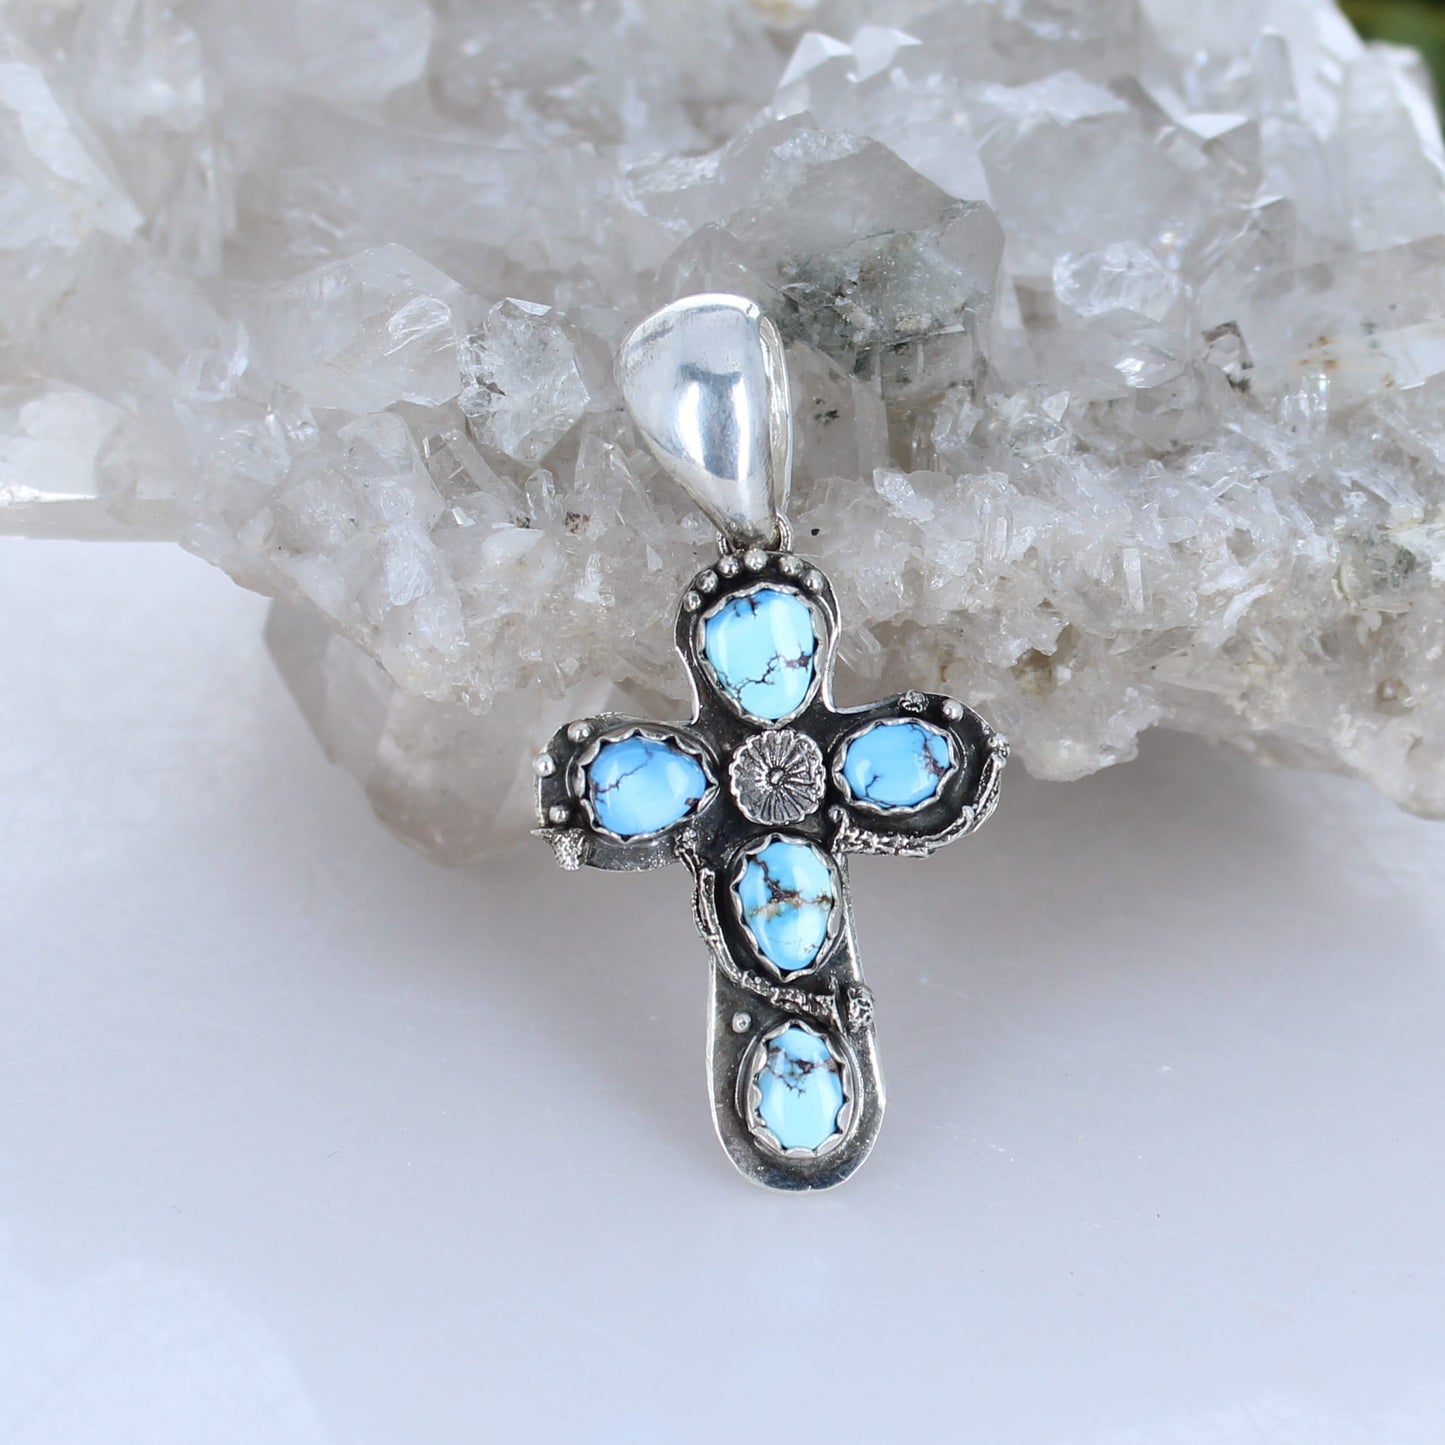 Baby Blue Kazakhstan Turquoise Cross Pendant Sterling Silver